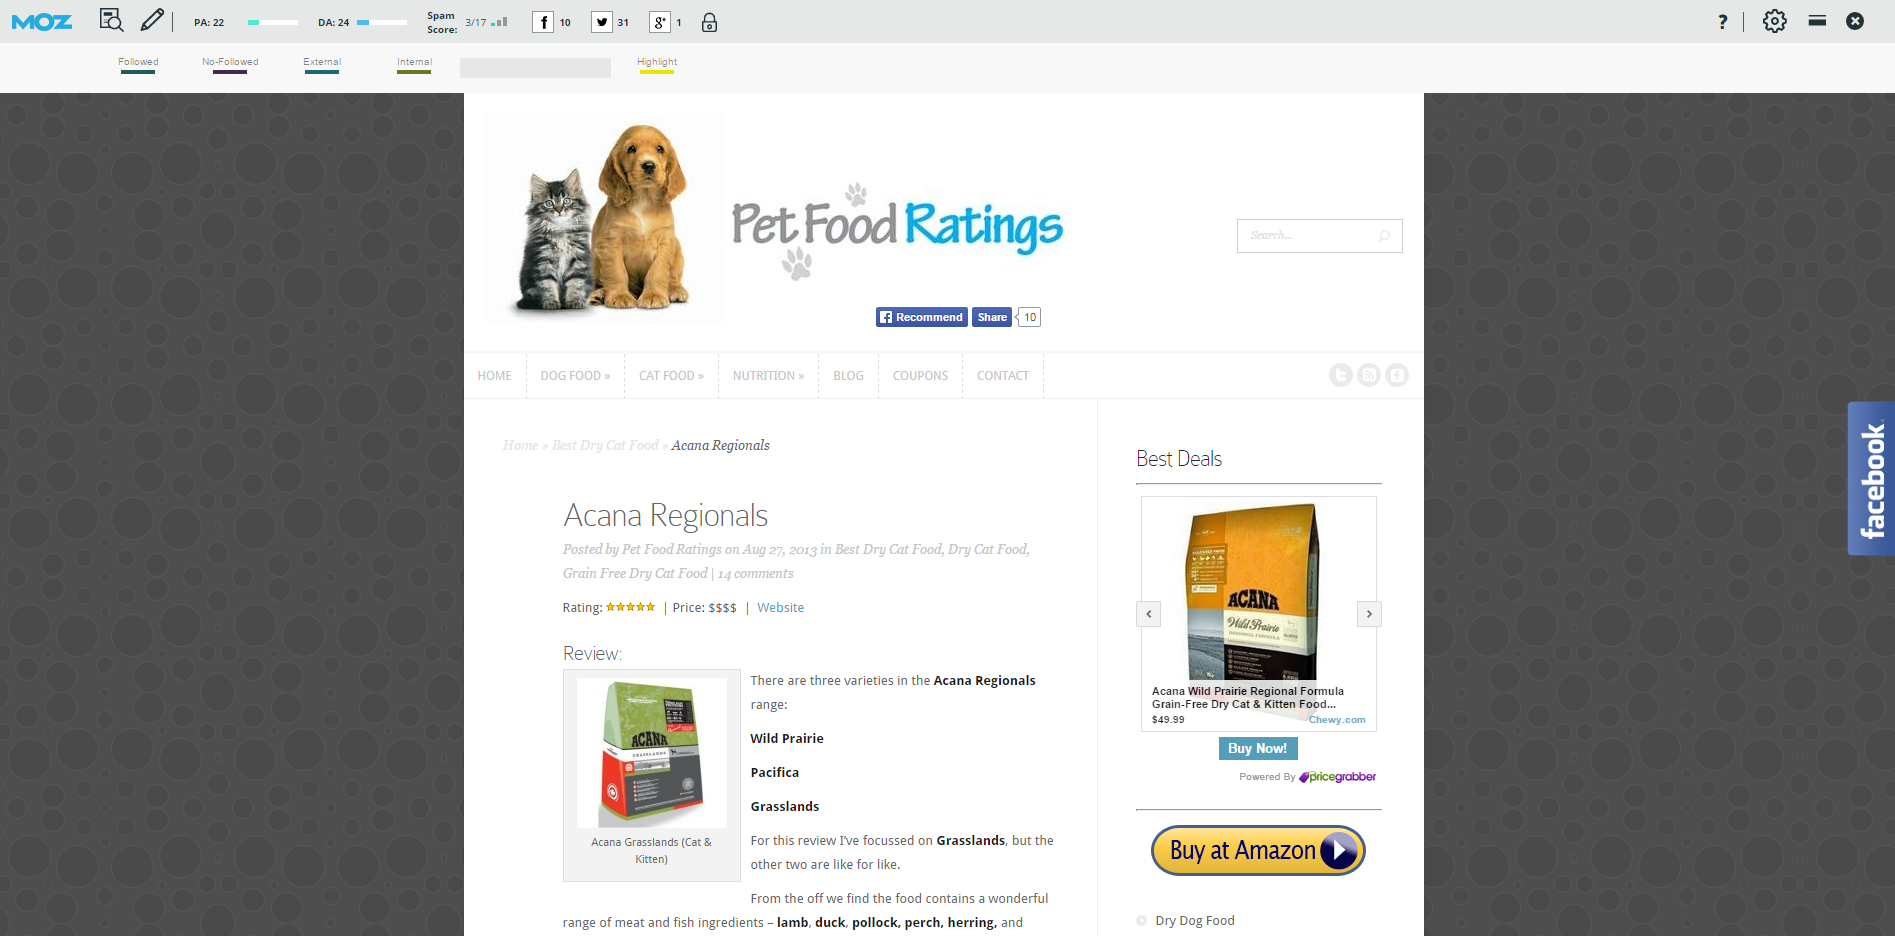 PetFood_Ratings_Acana_Regionals_Page